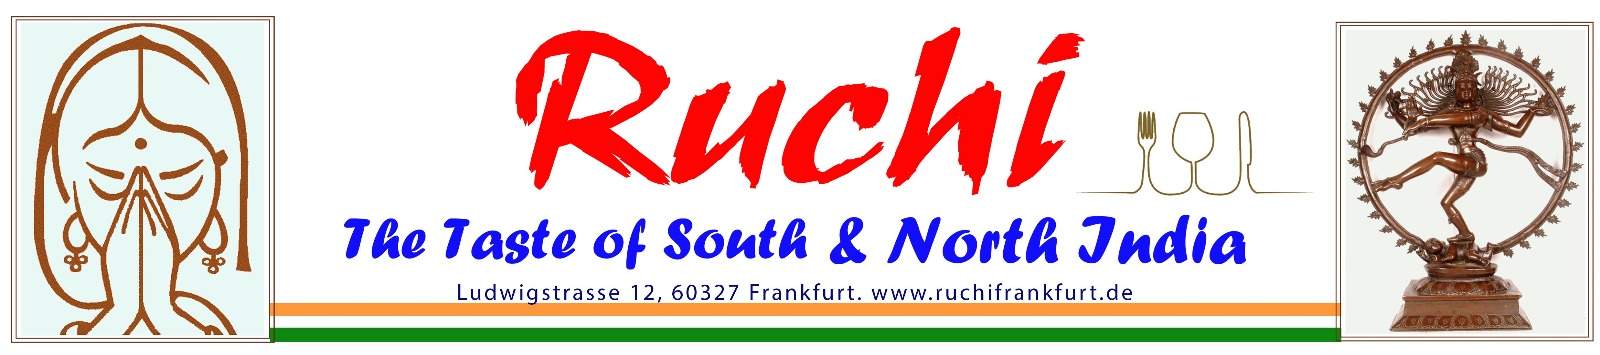 Ruchi Restaurant, Frankfurt